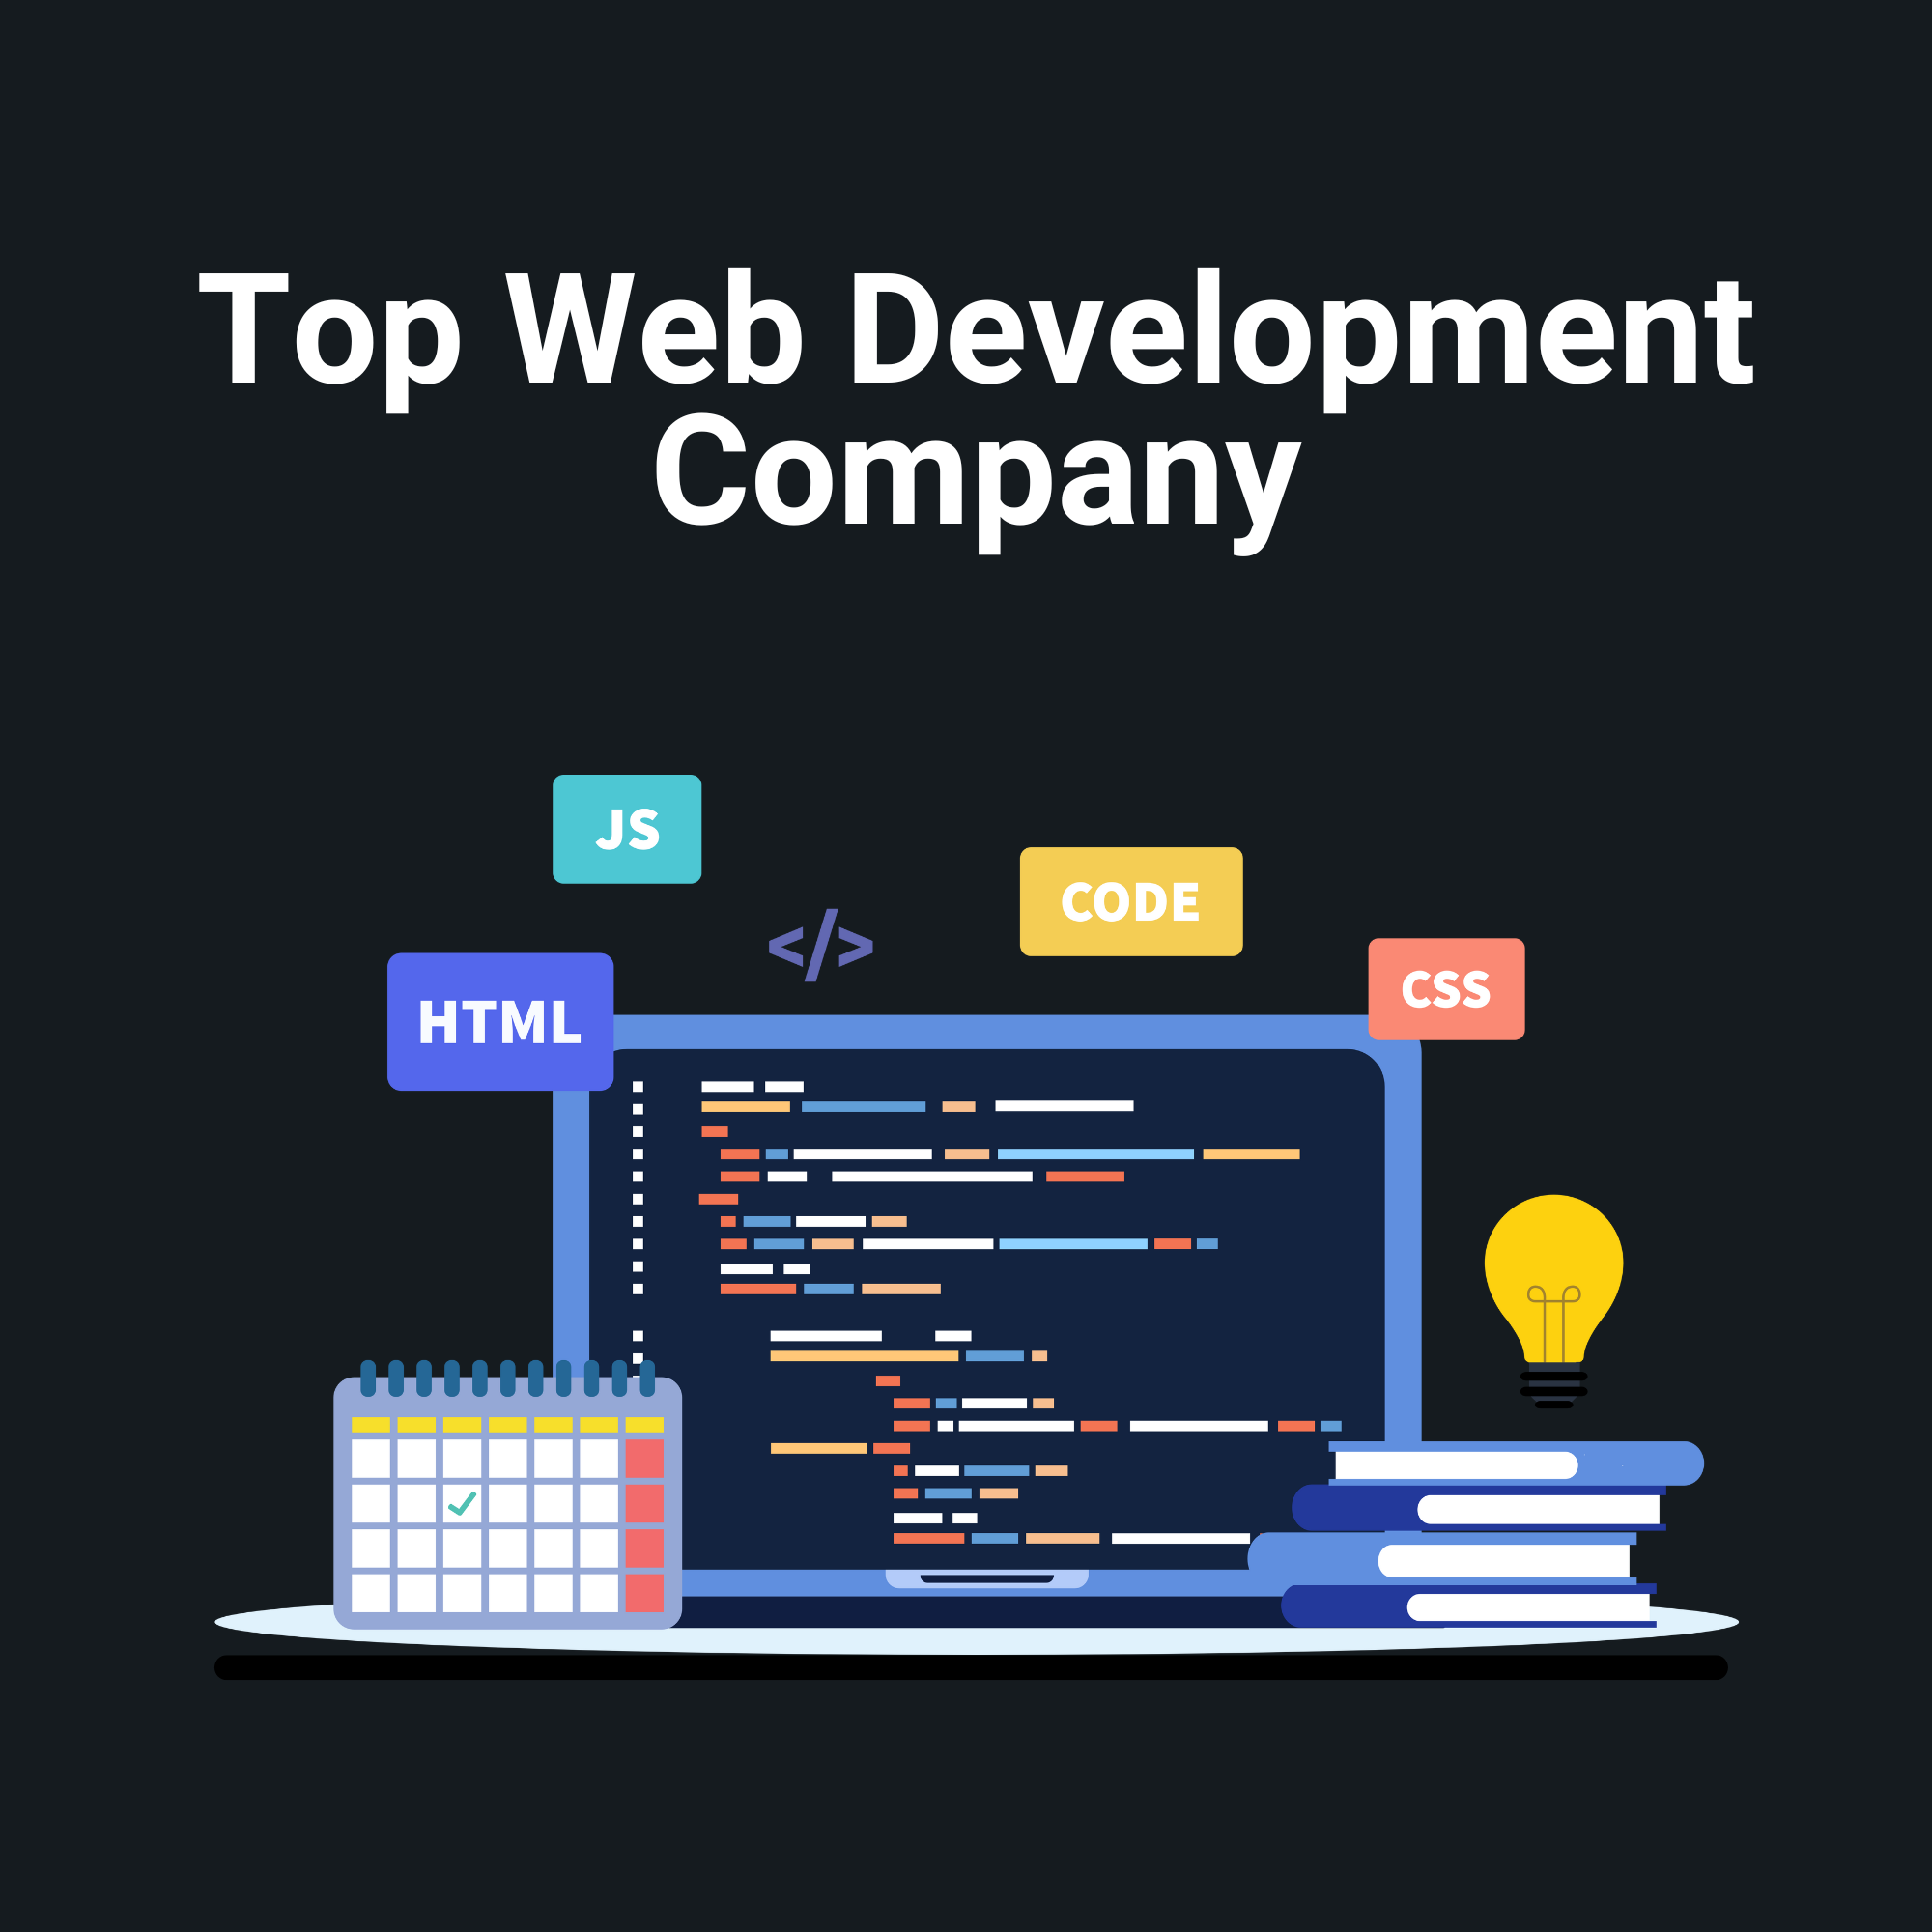 Top Web Development
Company